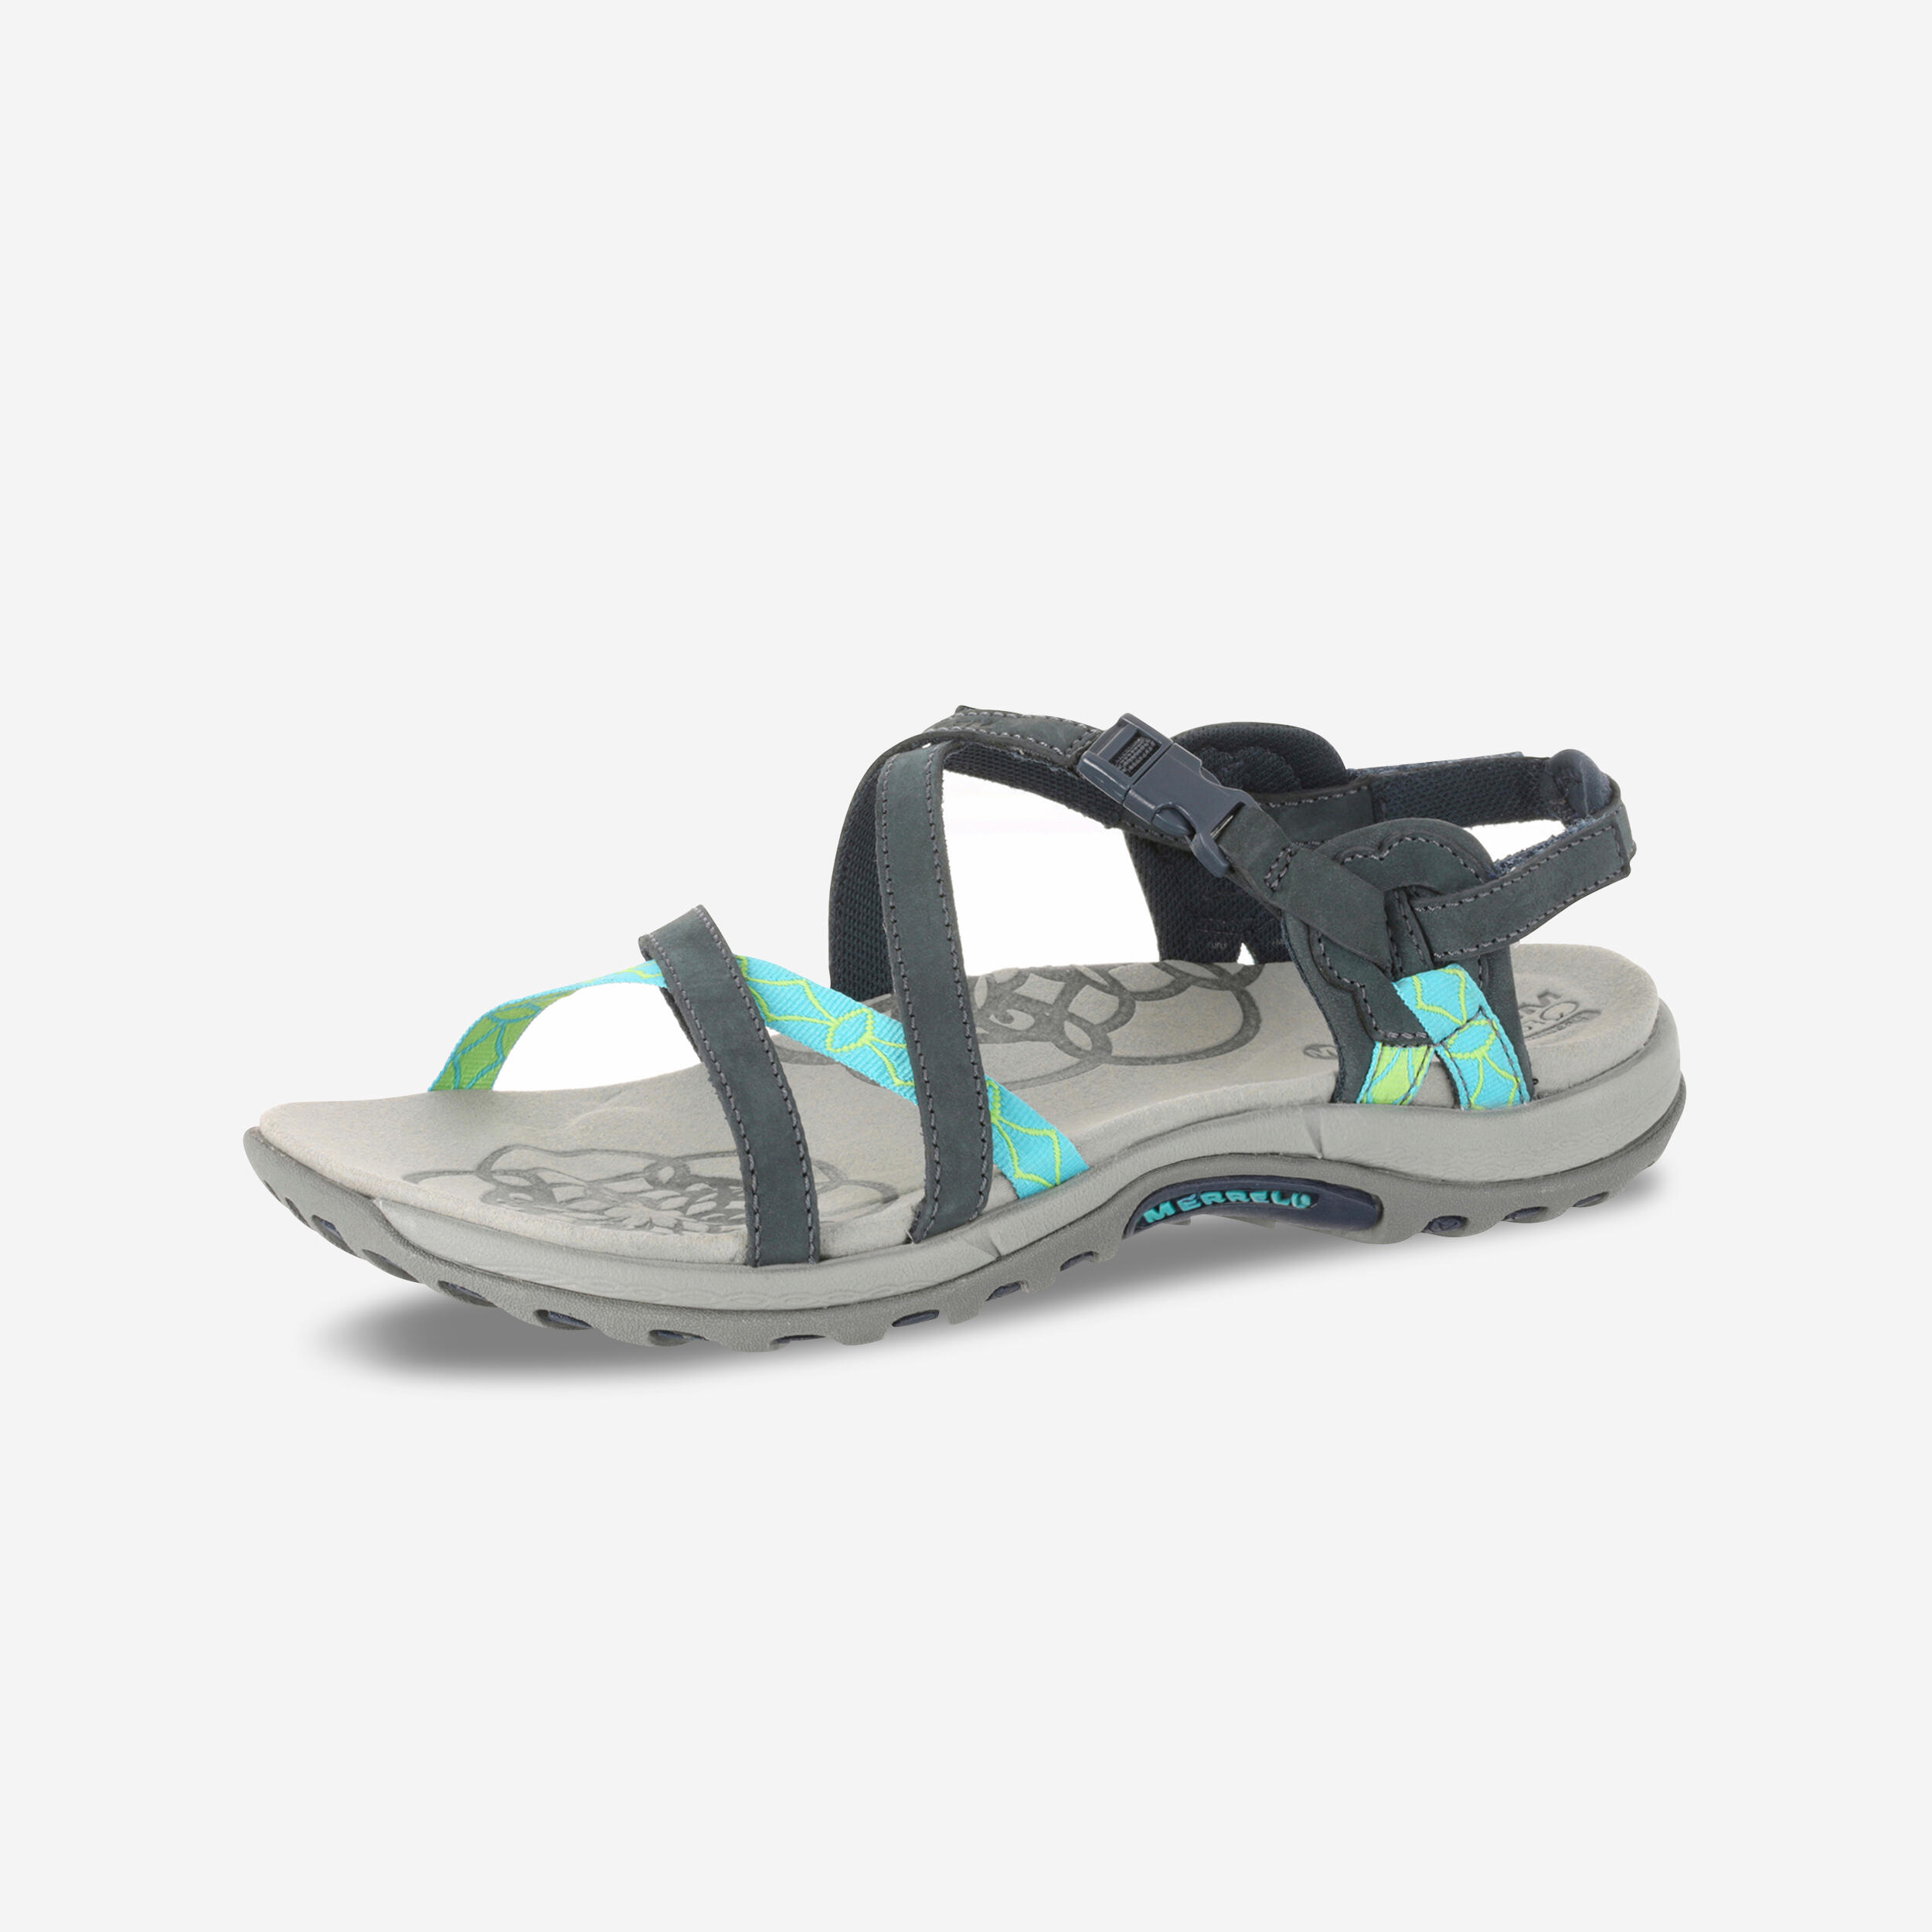 decathlon women's sandals